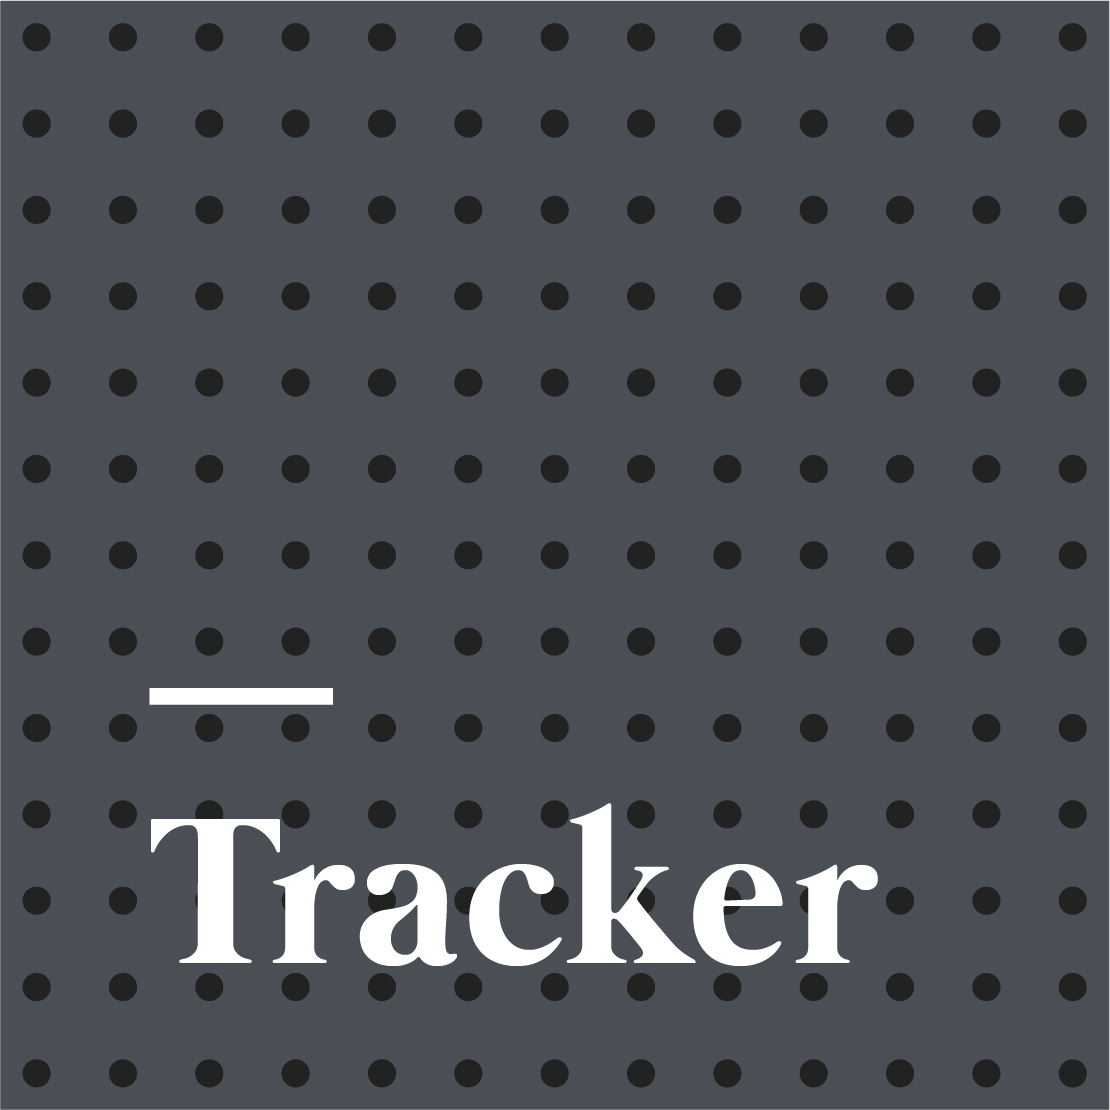 Sobriety Tracker